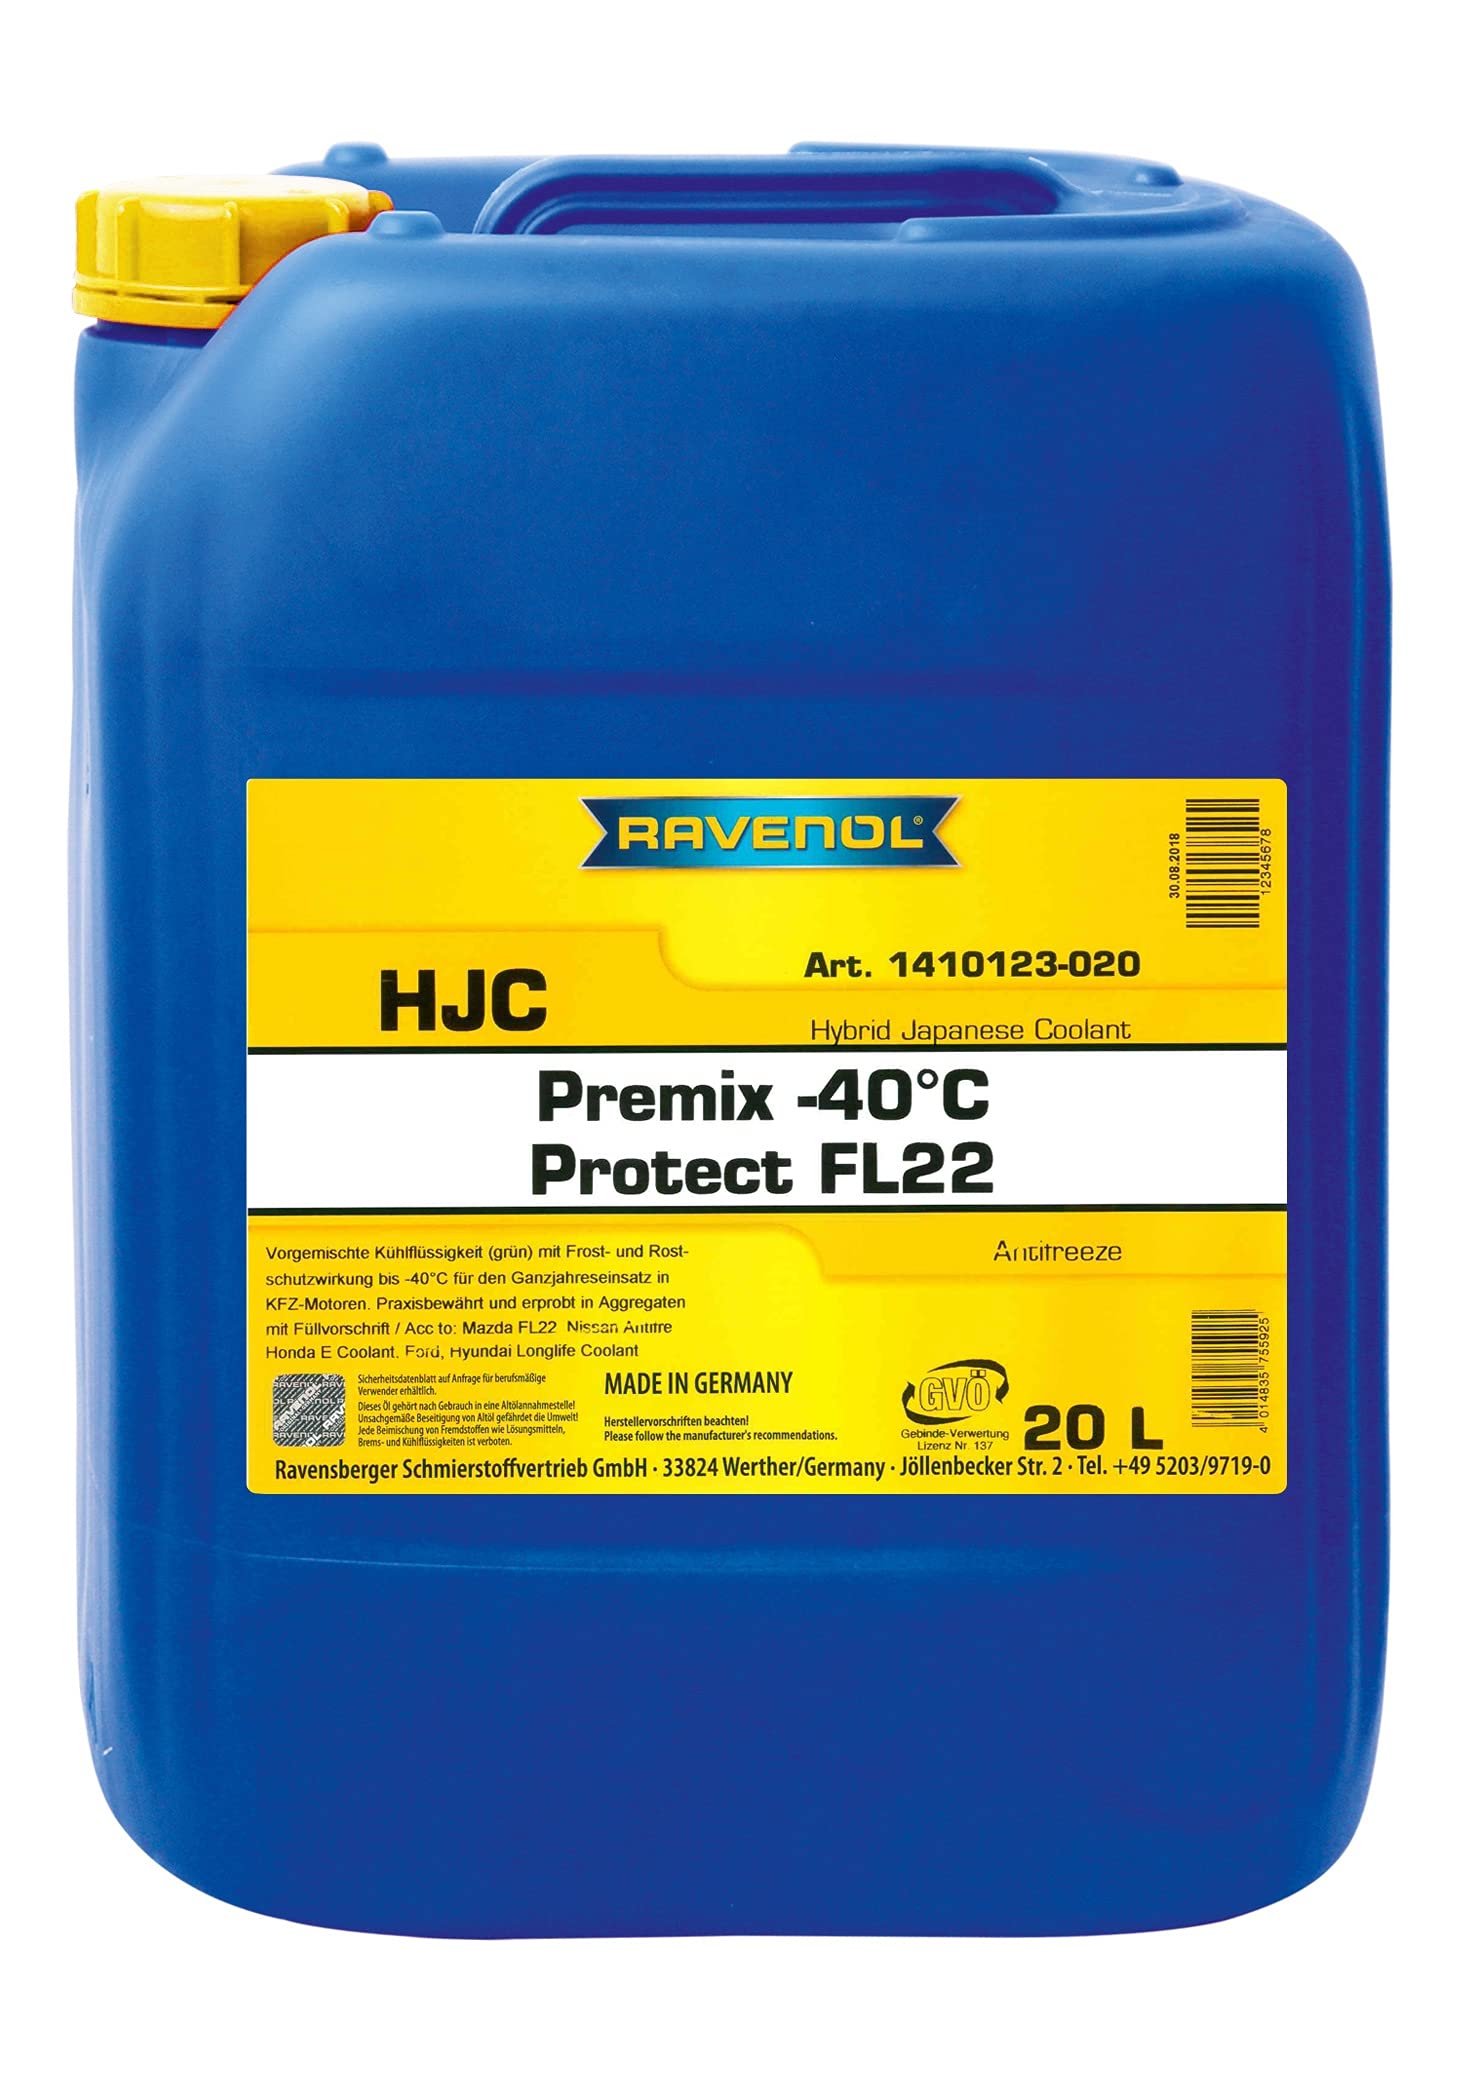 RAVENOL HJC Premix -40°C Protect FL22 von RAVENOL